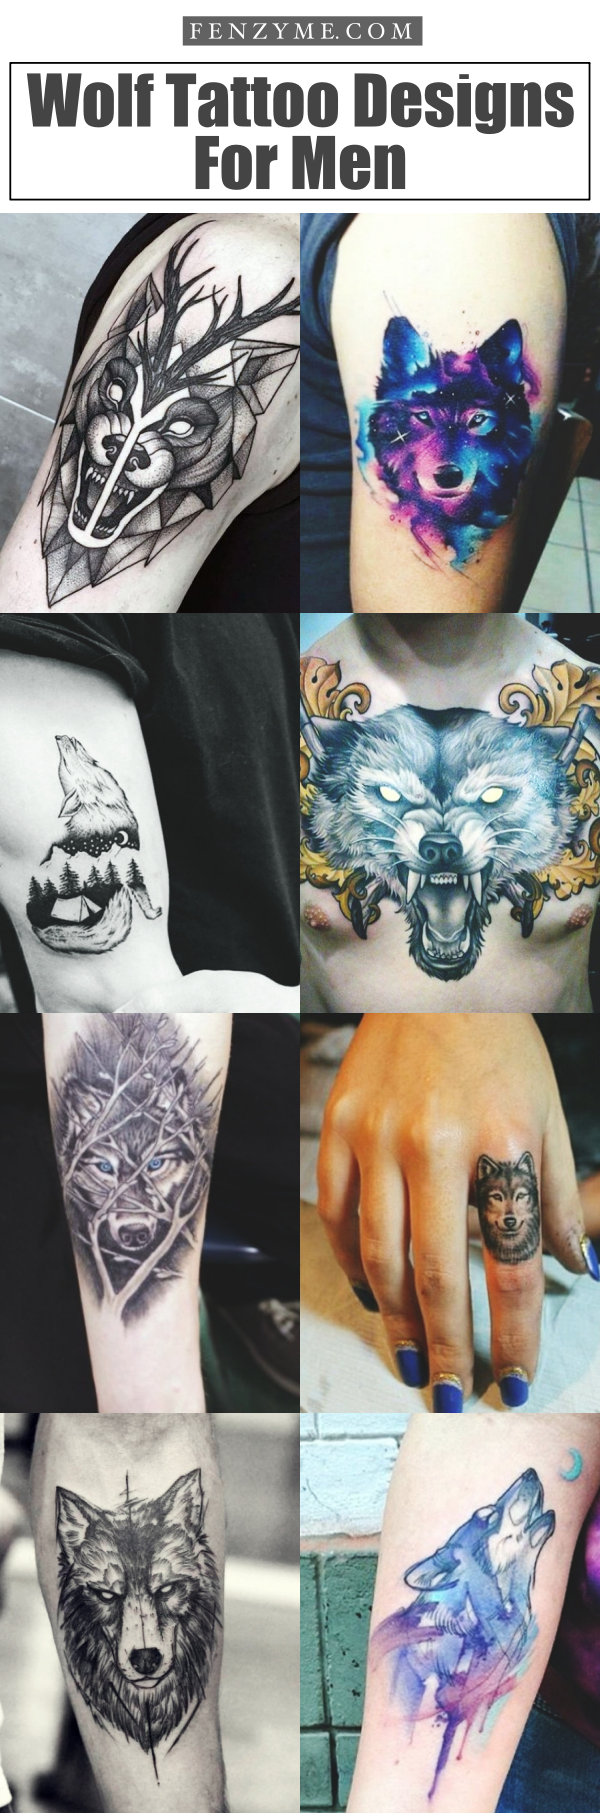 Wolf Tattoo Designs For Men1